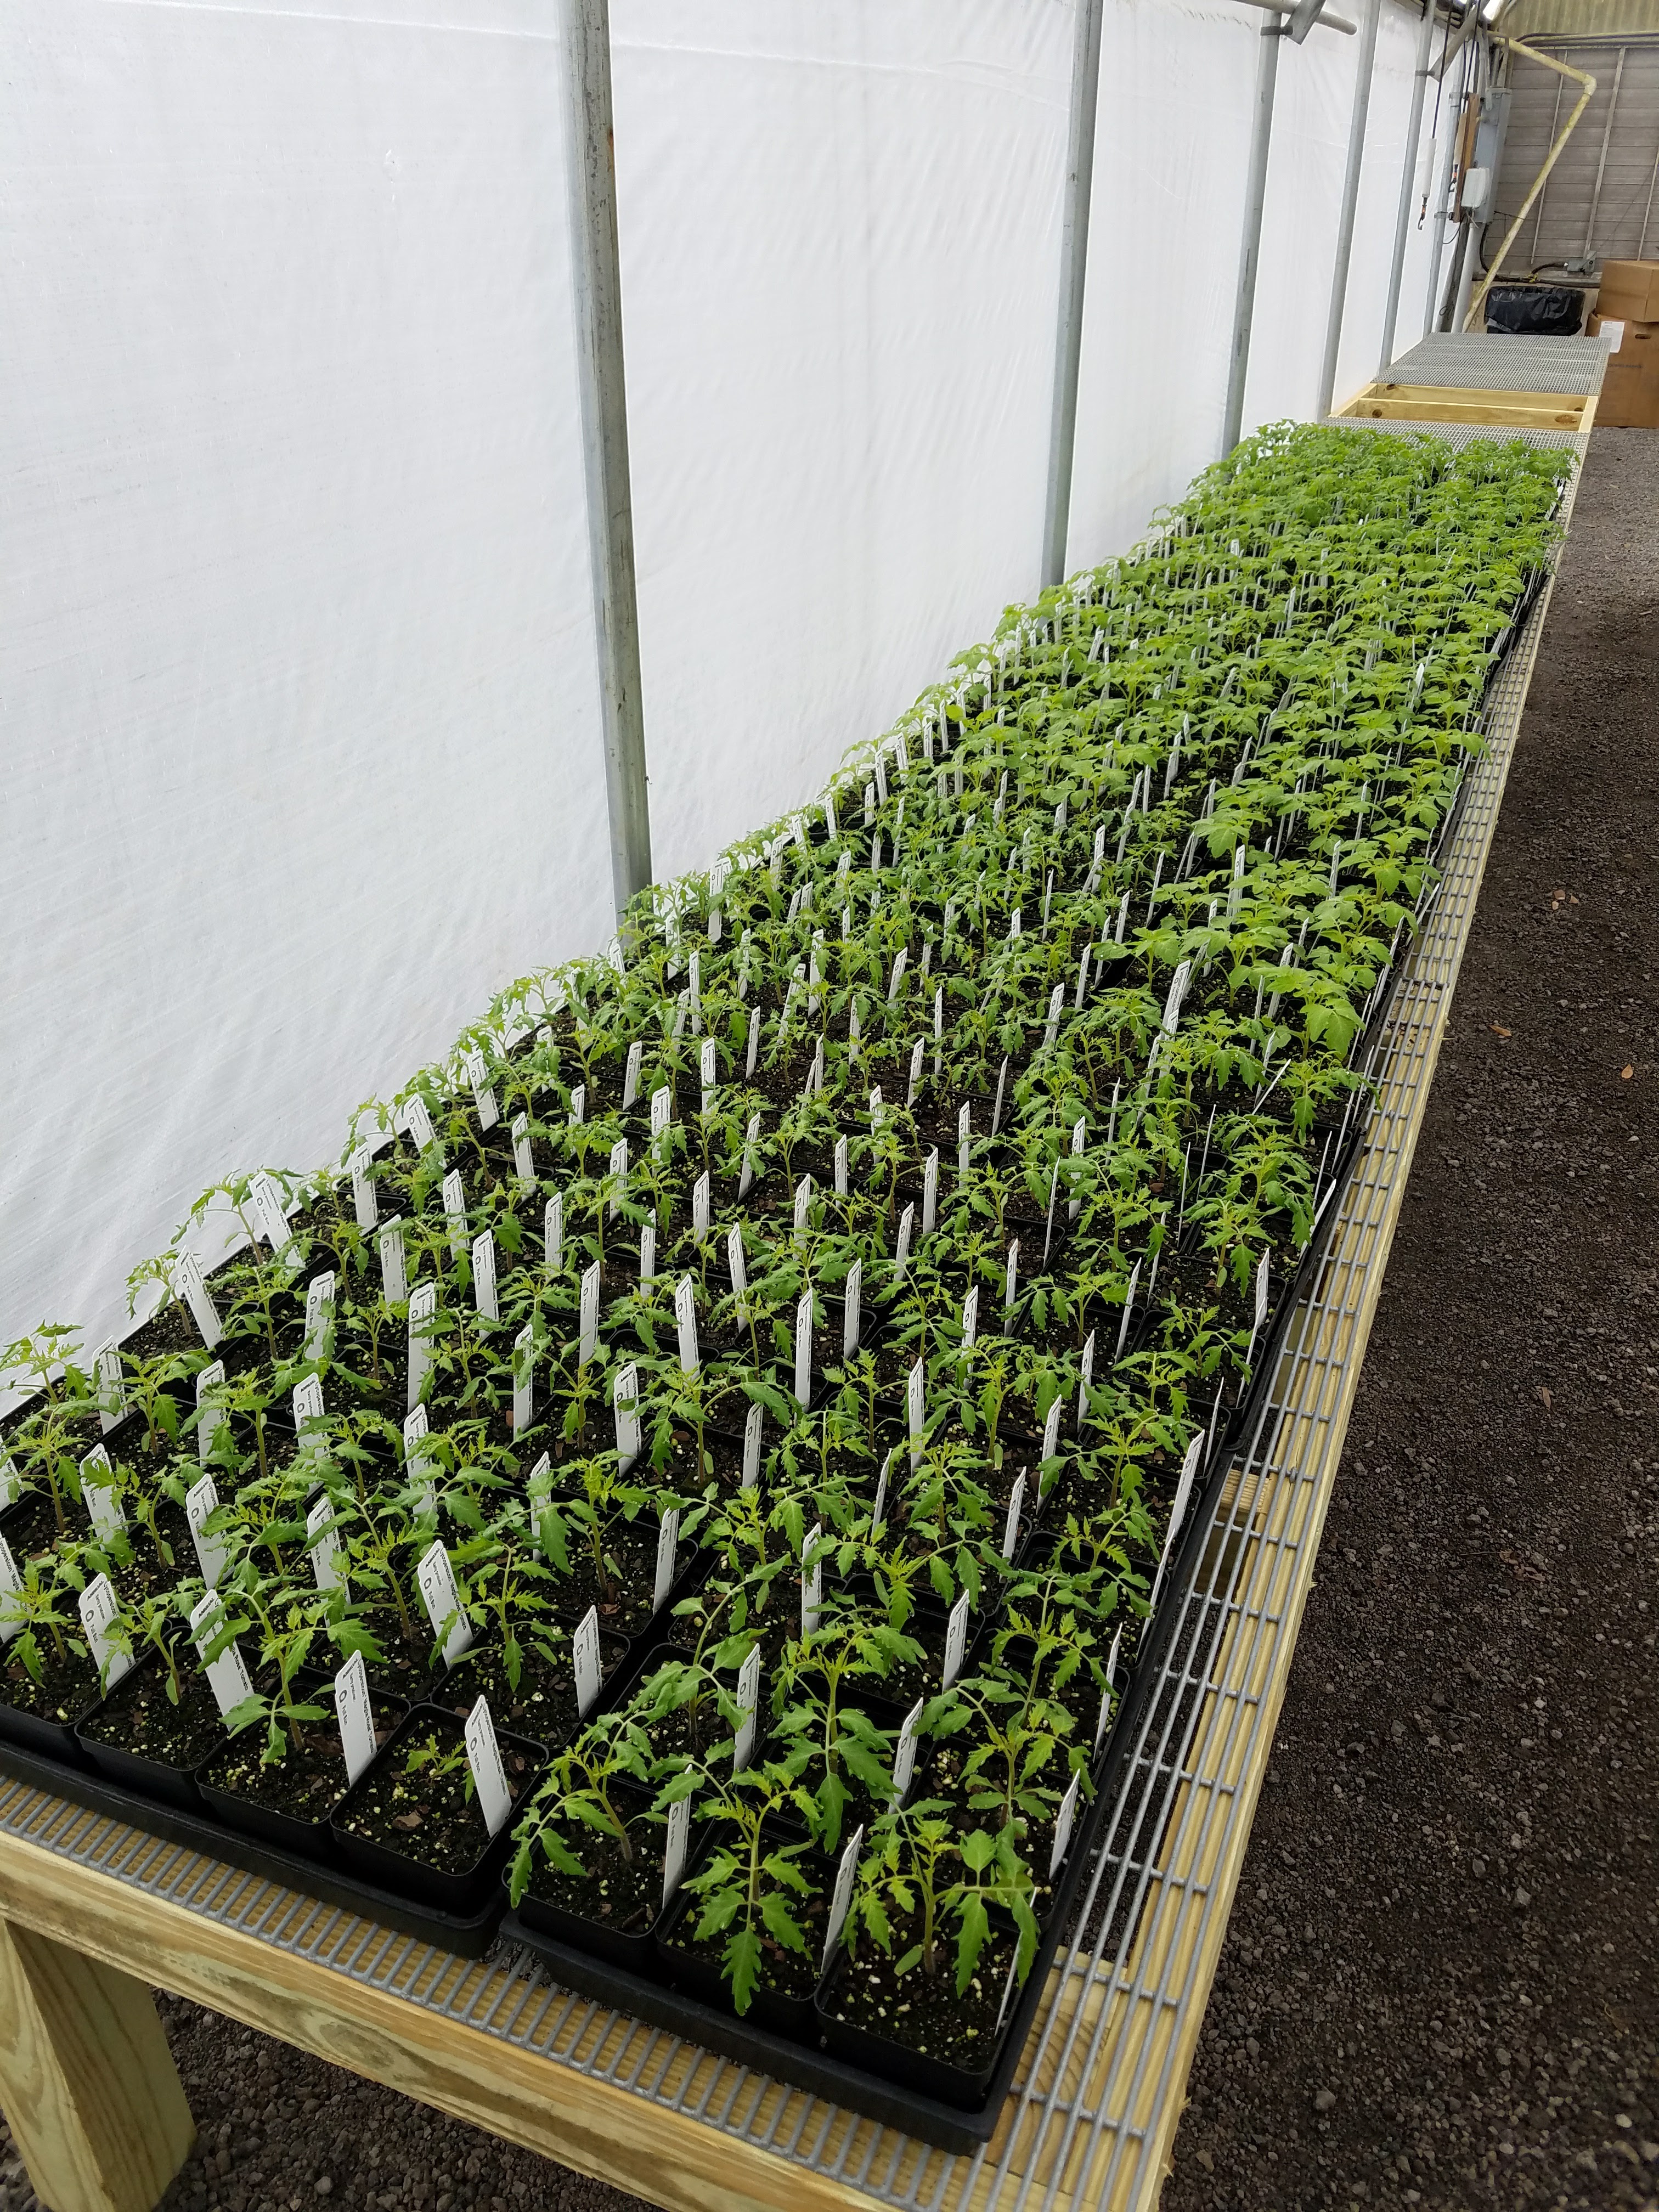 Flats of tomato seedlings